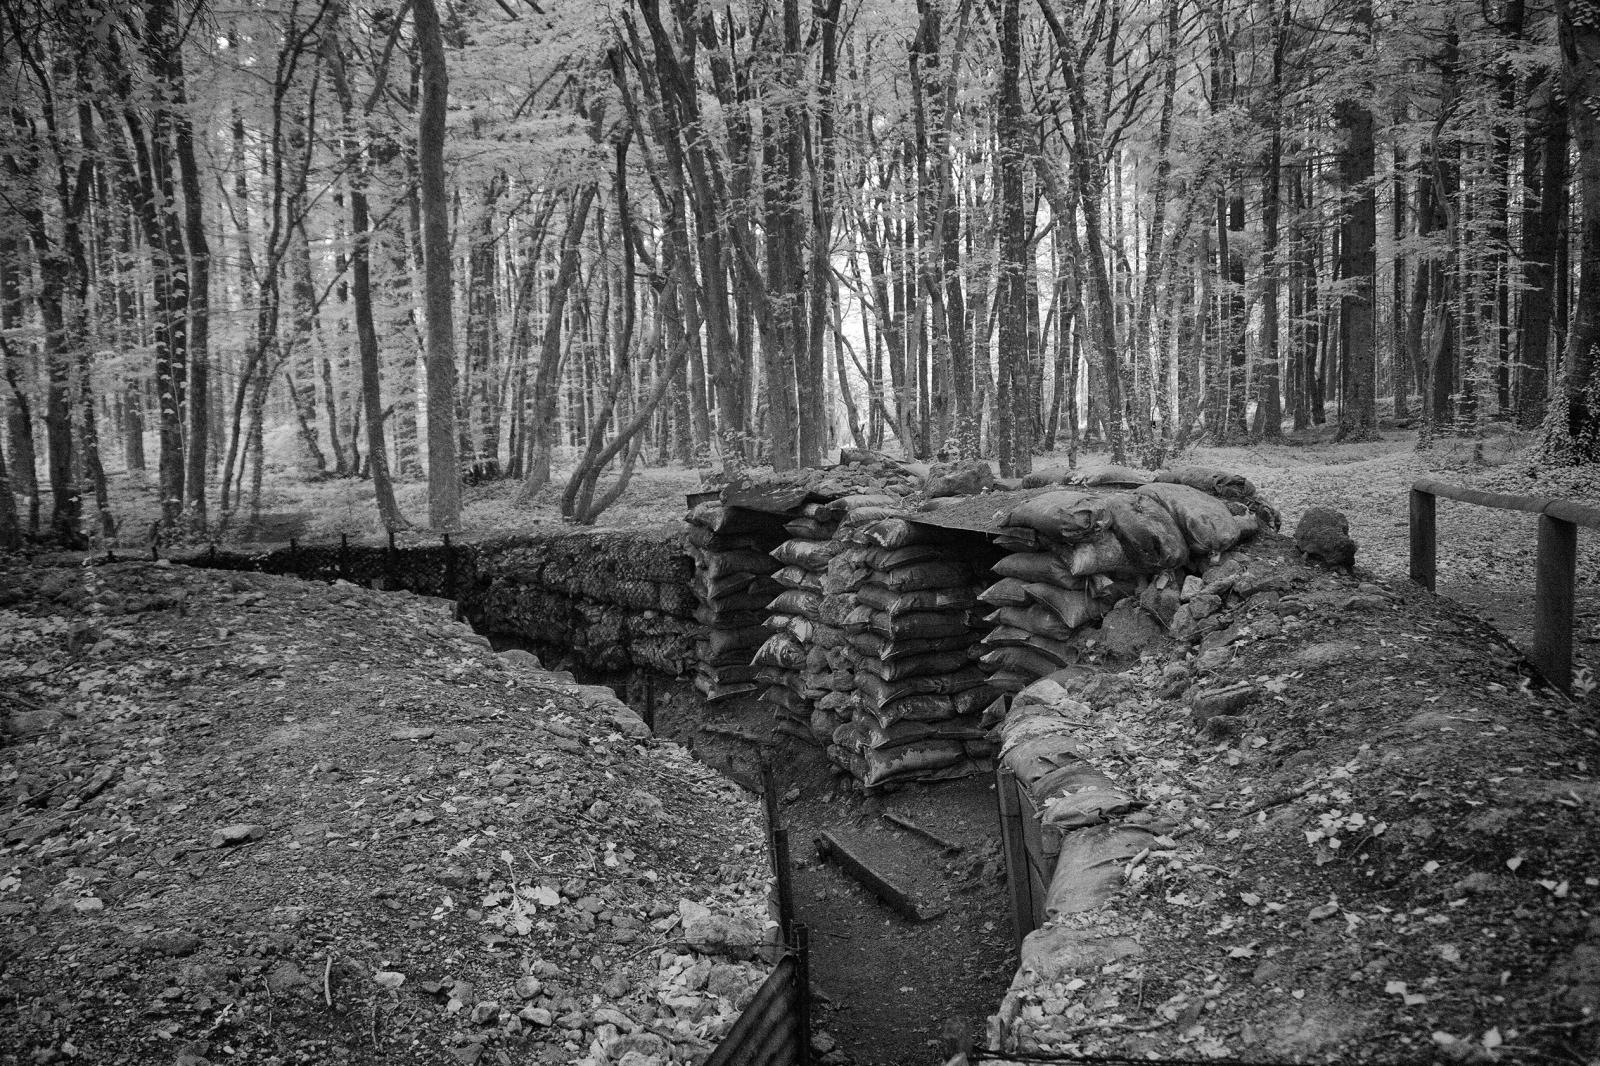 A French Army trench, near the Bois Brulee : World War 1 : David Burnett | Photographer